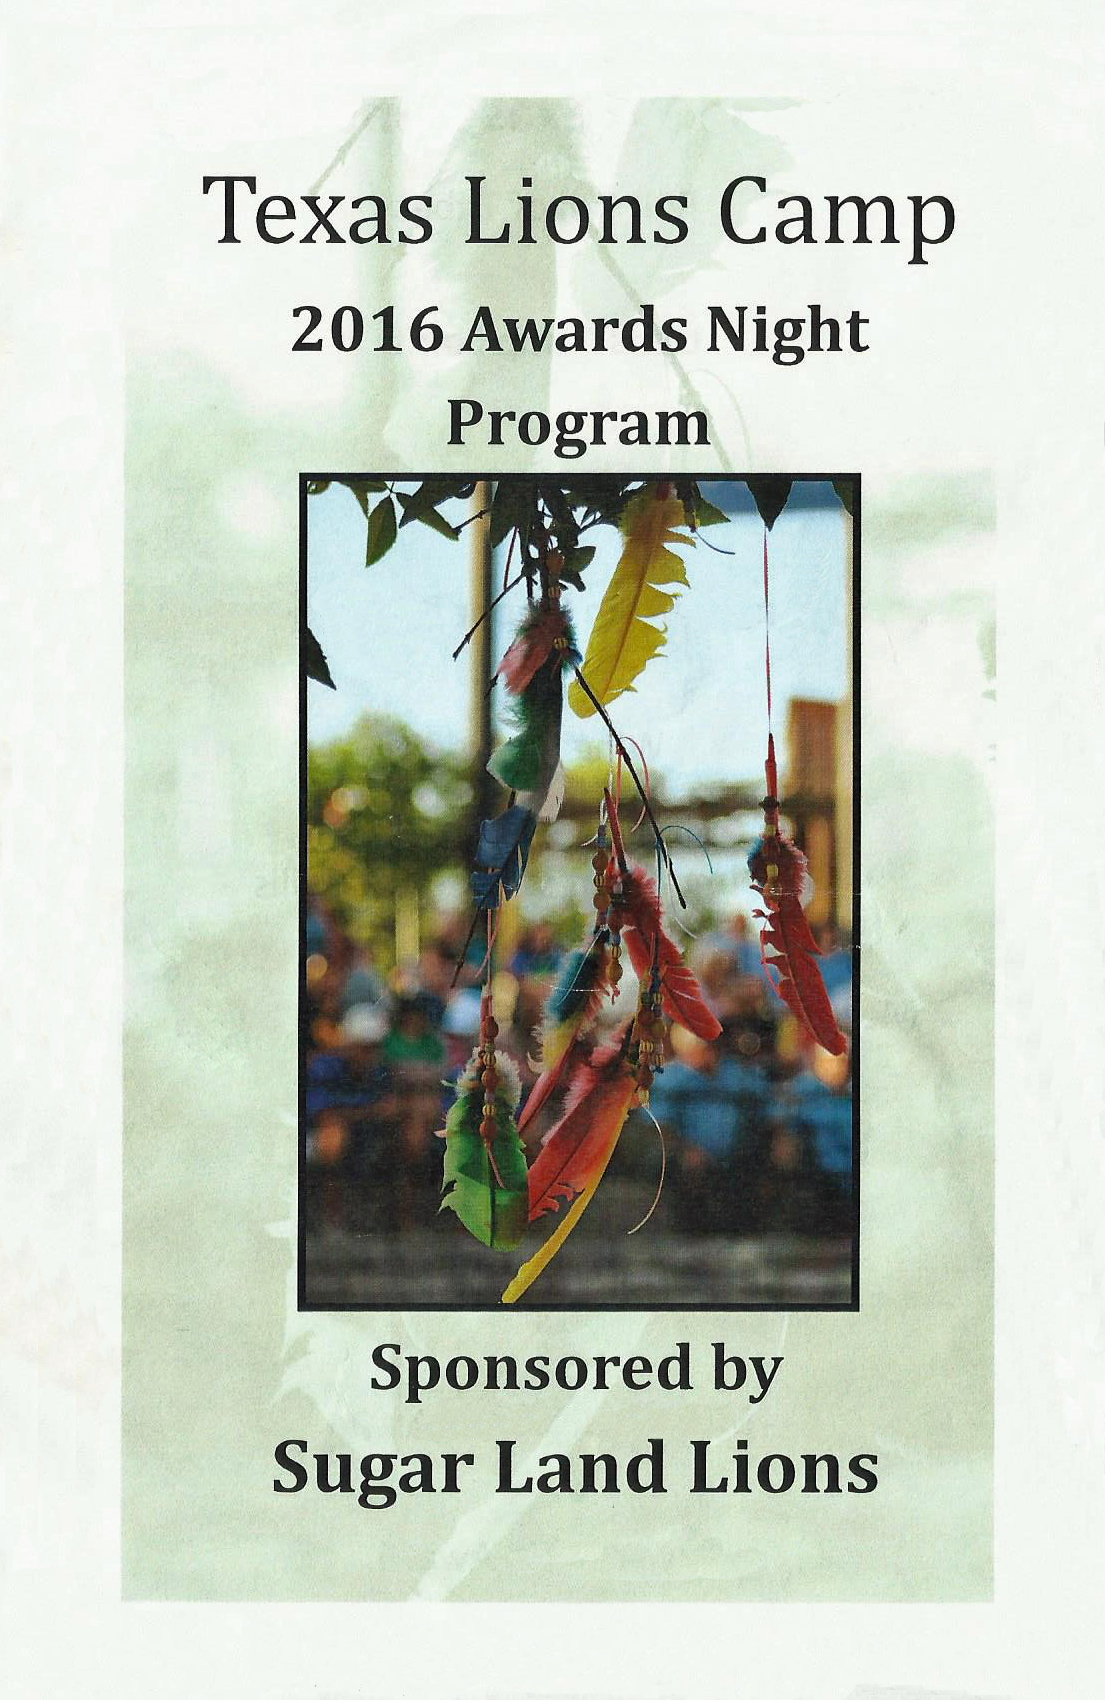 Awards Night at Texas Lions Camp 2016